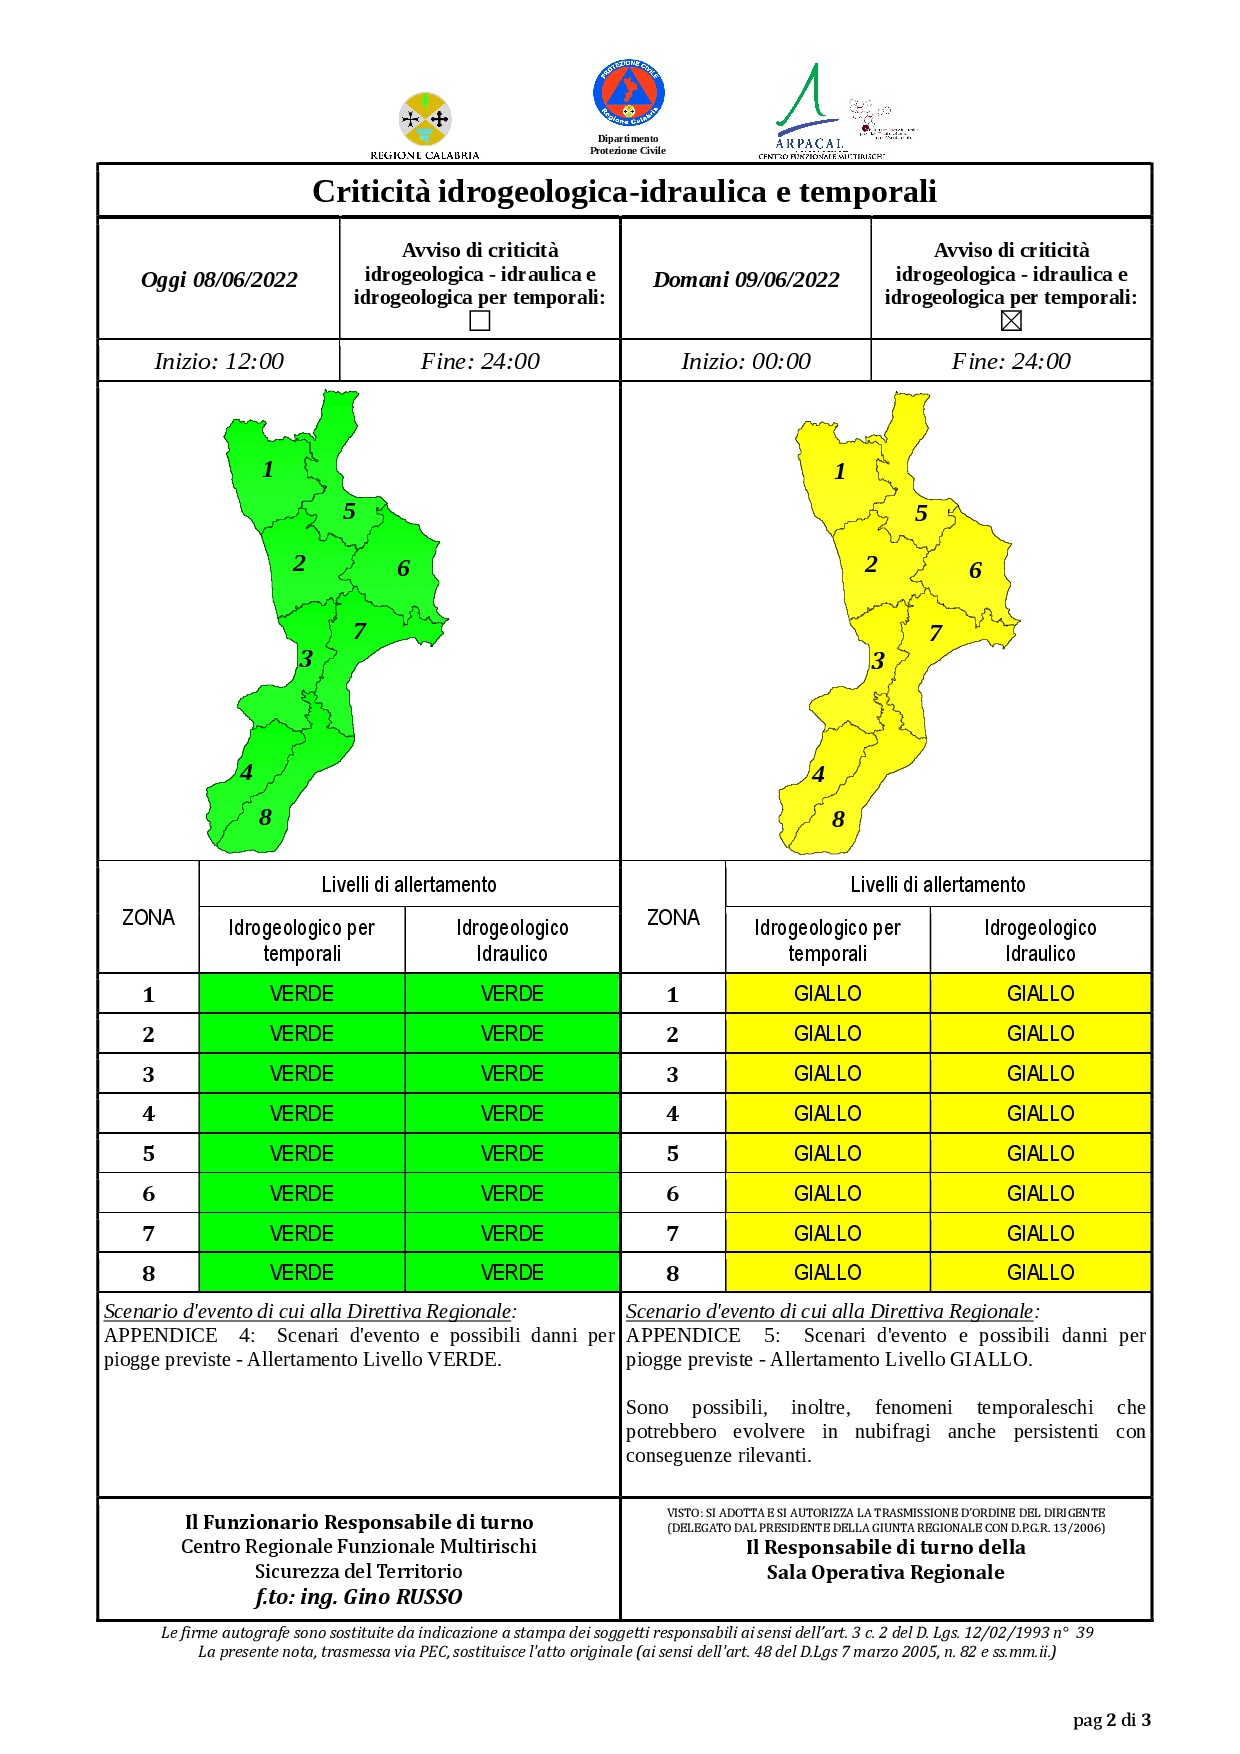 Criticità idrogeologica-idraulica e temporali in Calabria 08-06-2022